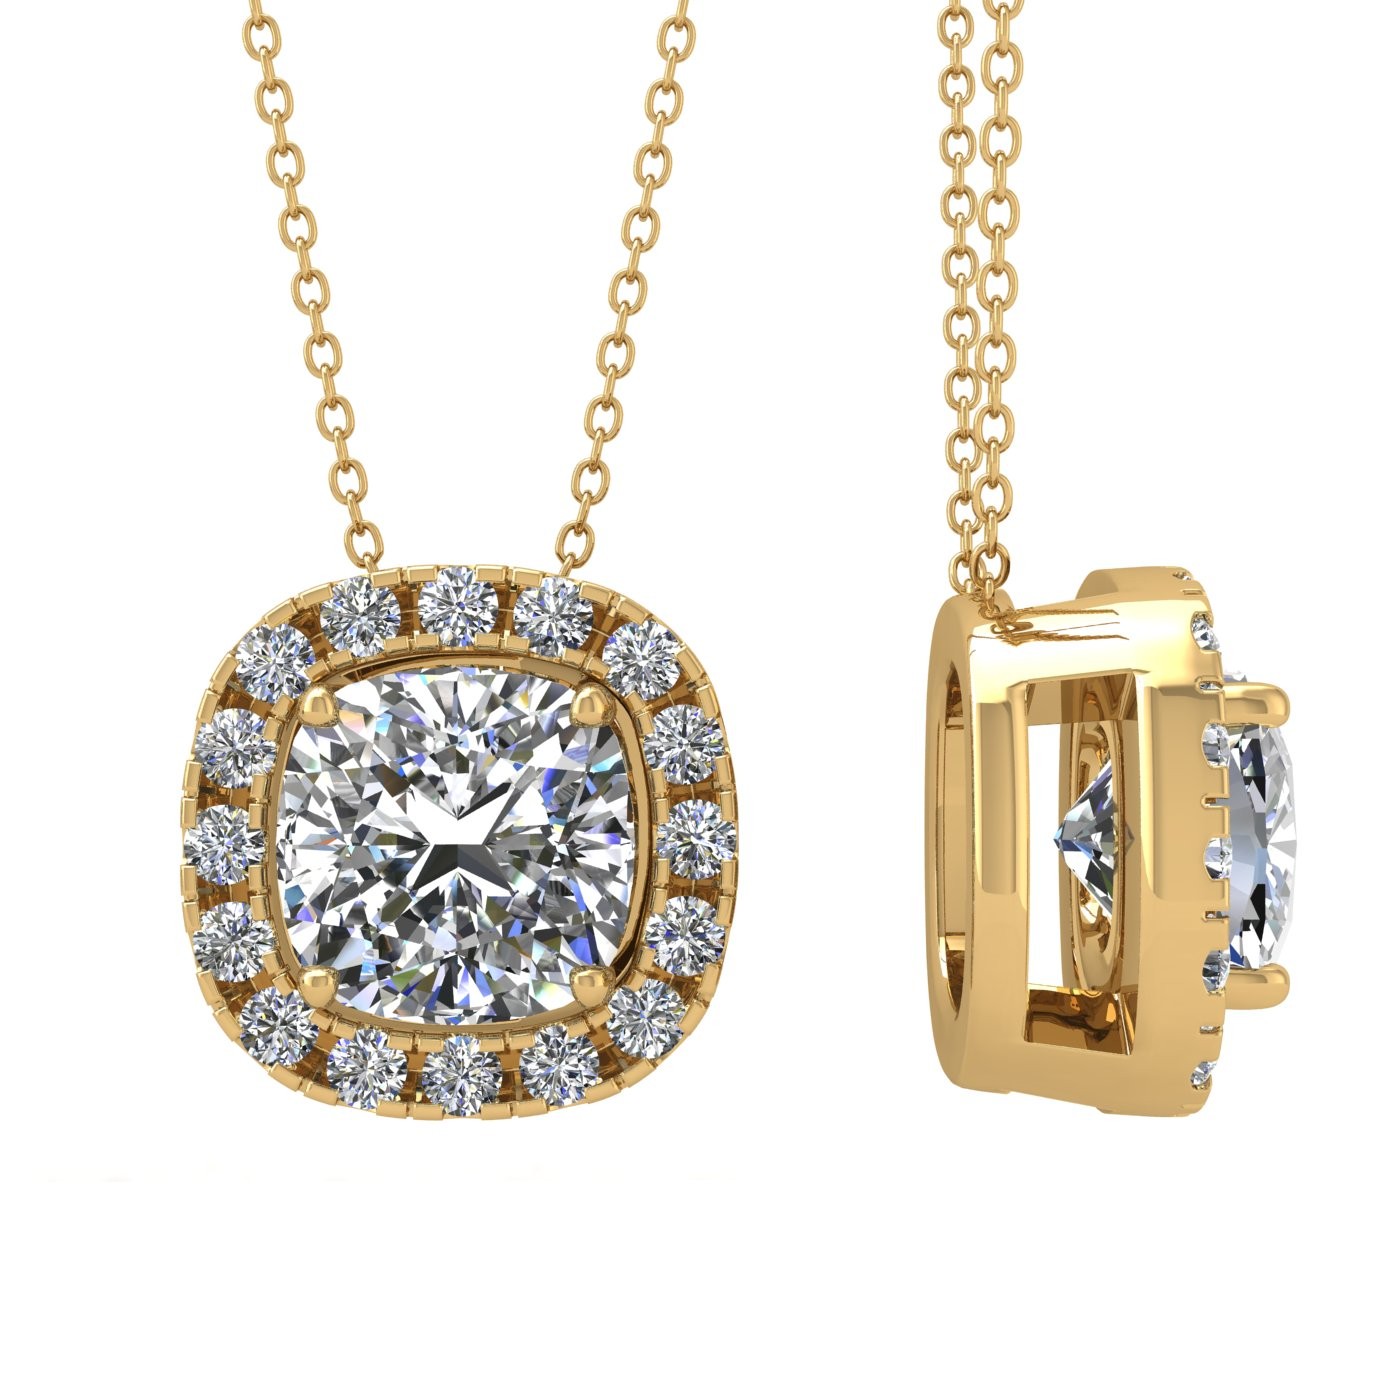 18k rose gold  2.5 ct 4 prongs cushion shape diamond pendant with diamond pavÉ set halo Photos & images